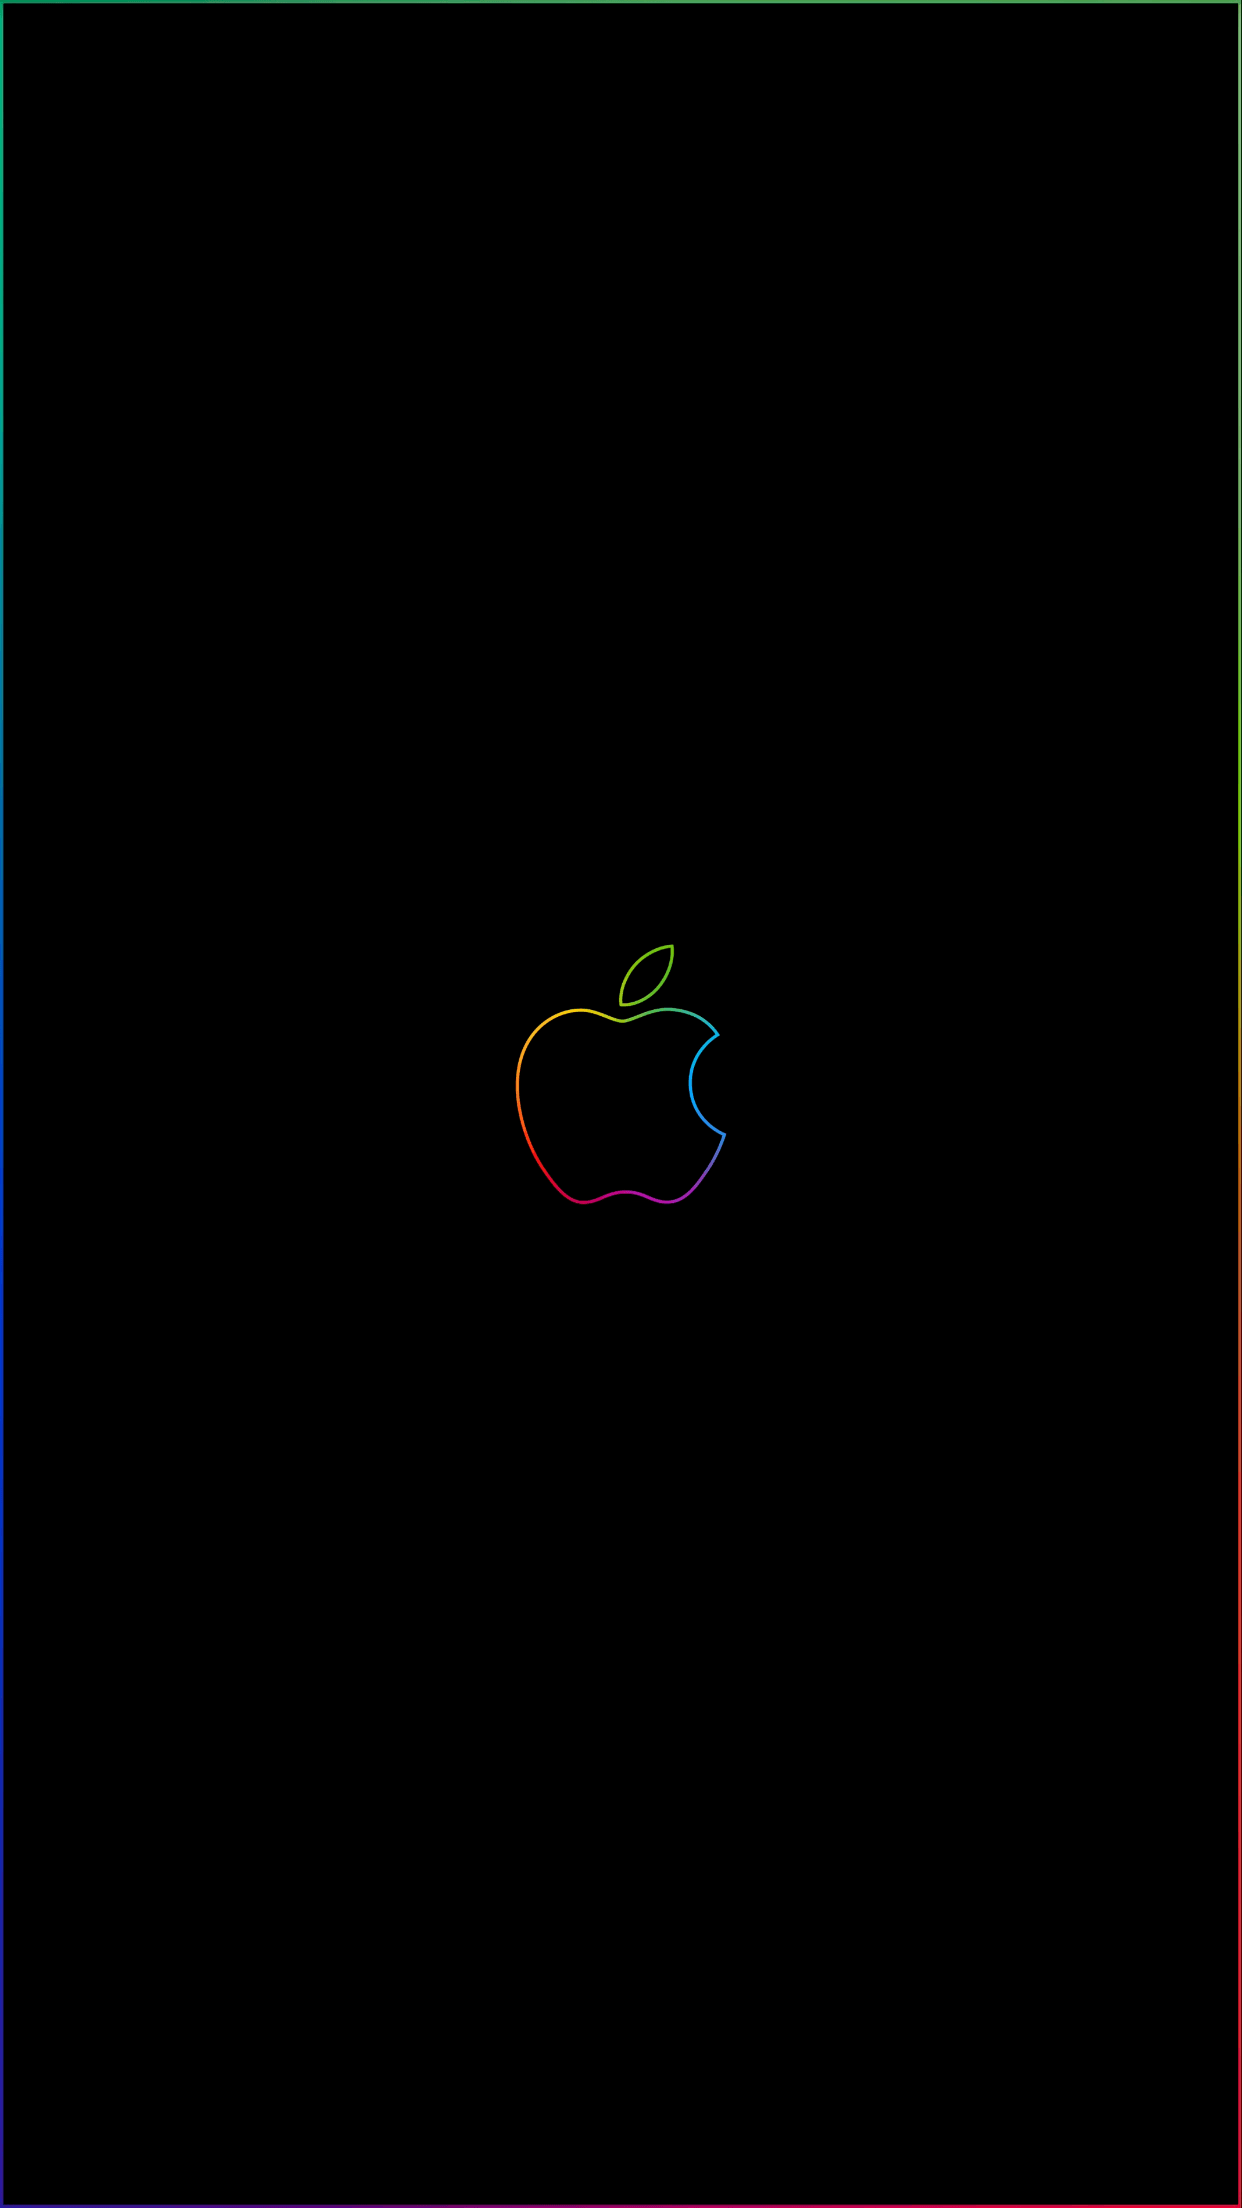 Rainbow border & apple logo iPhone wallpaper Imgur links